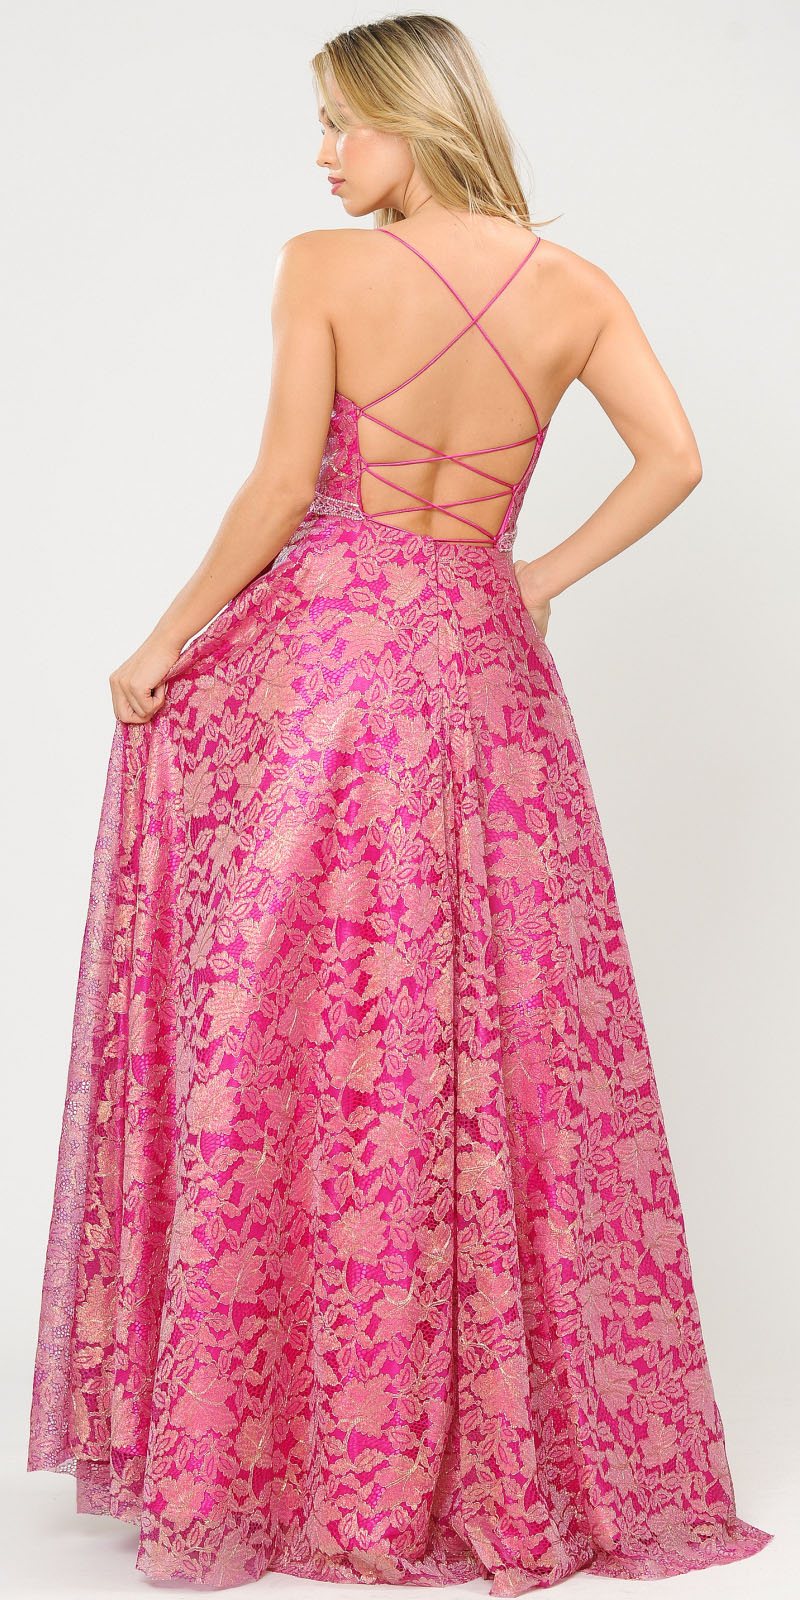 Poly USA 8562 Embellished Waist Lace Long Prom Dress Magenta/Fuchsia